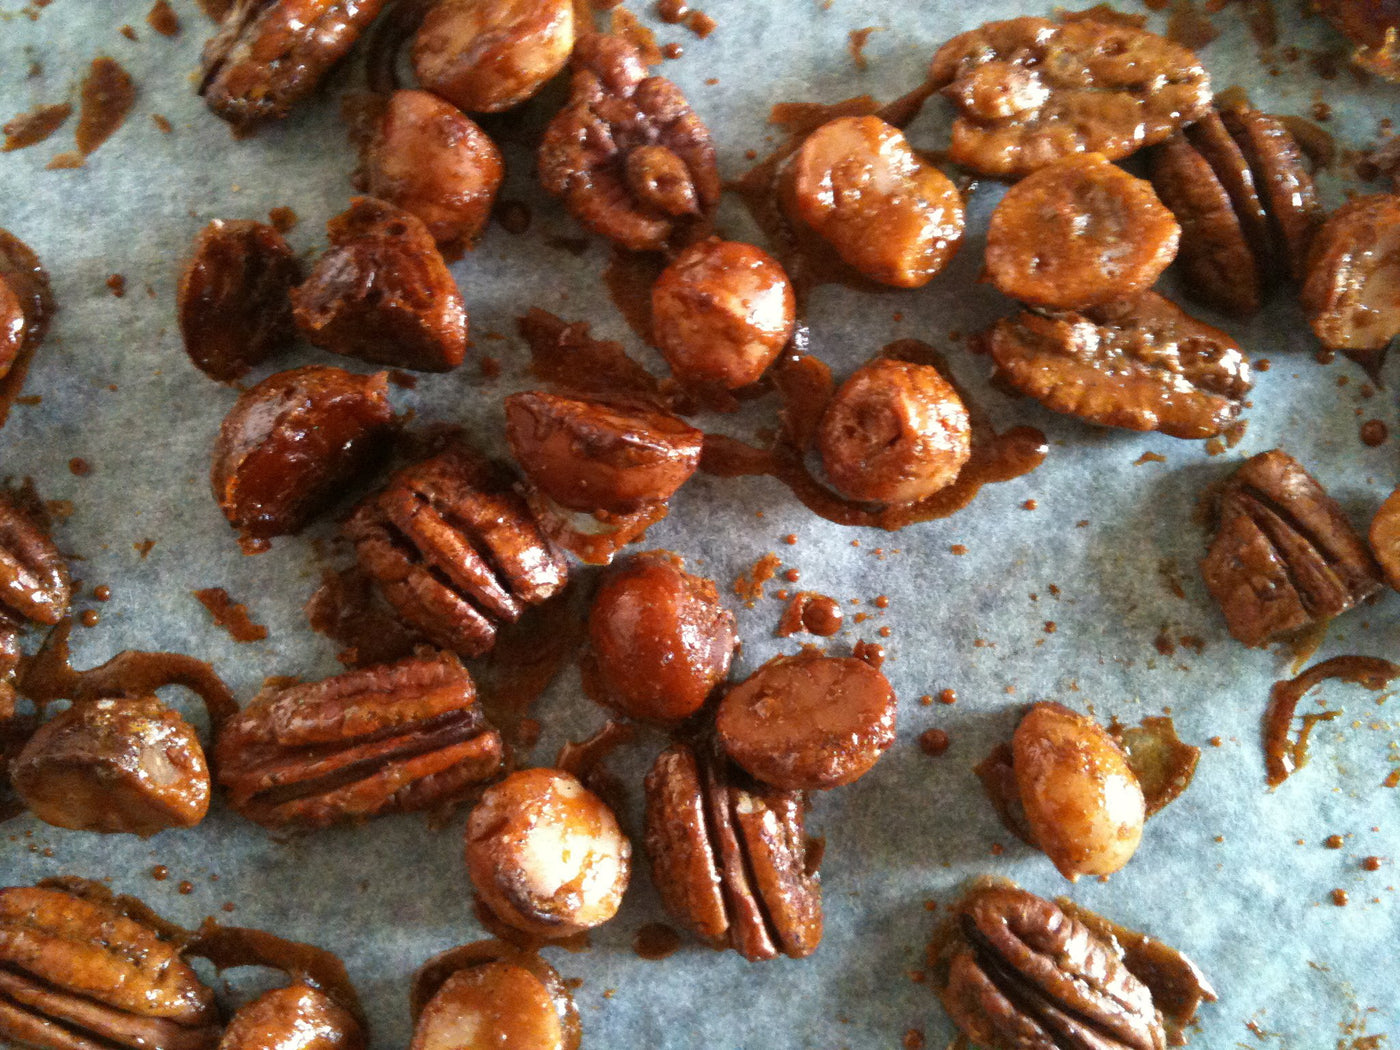 Honey roasted nuts